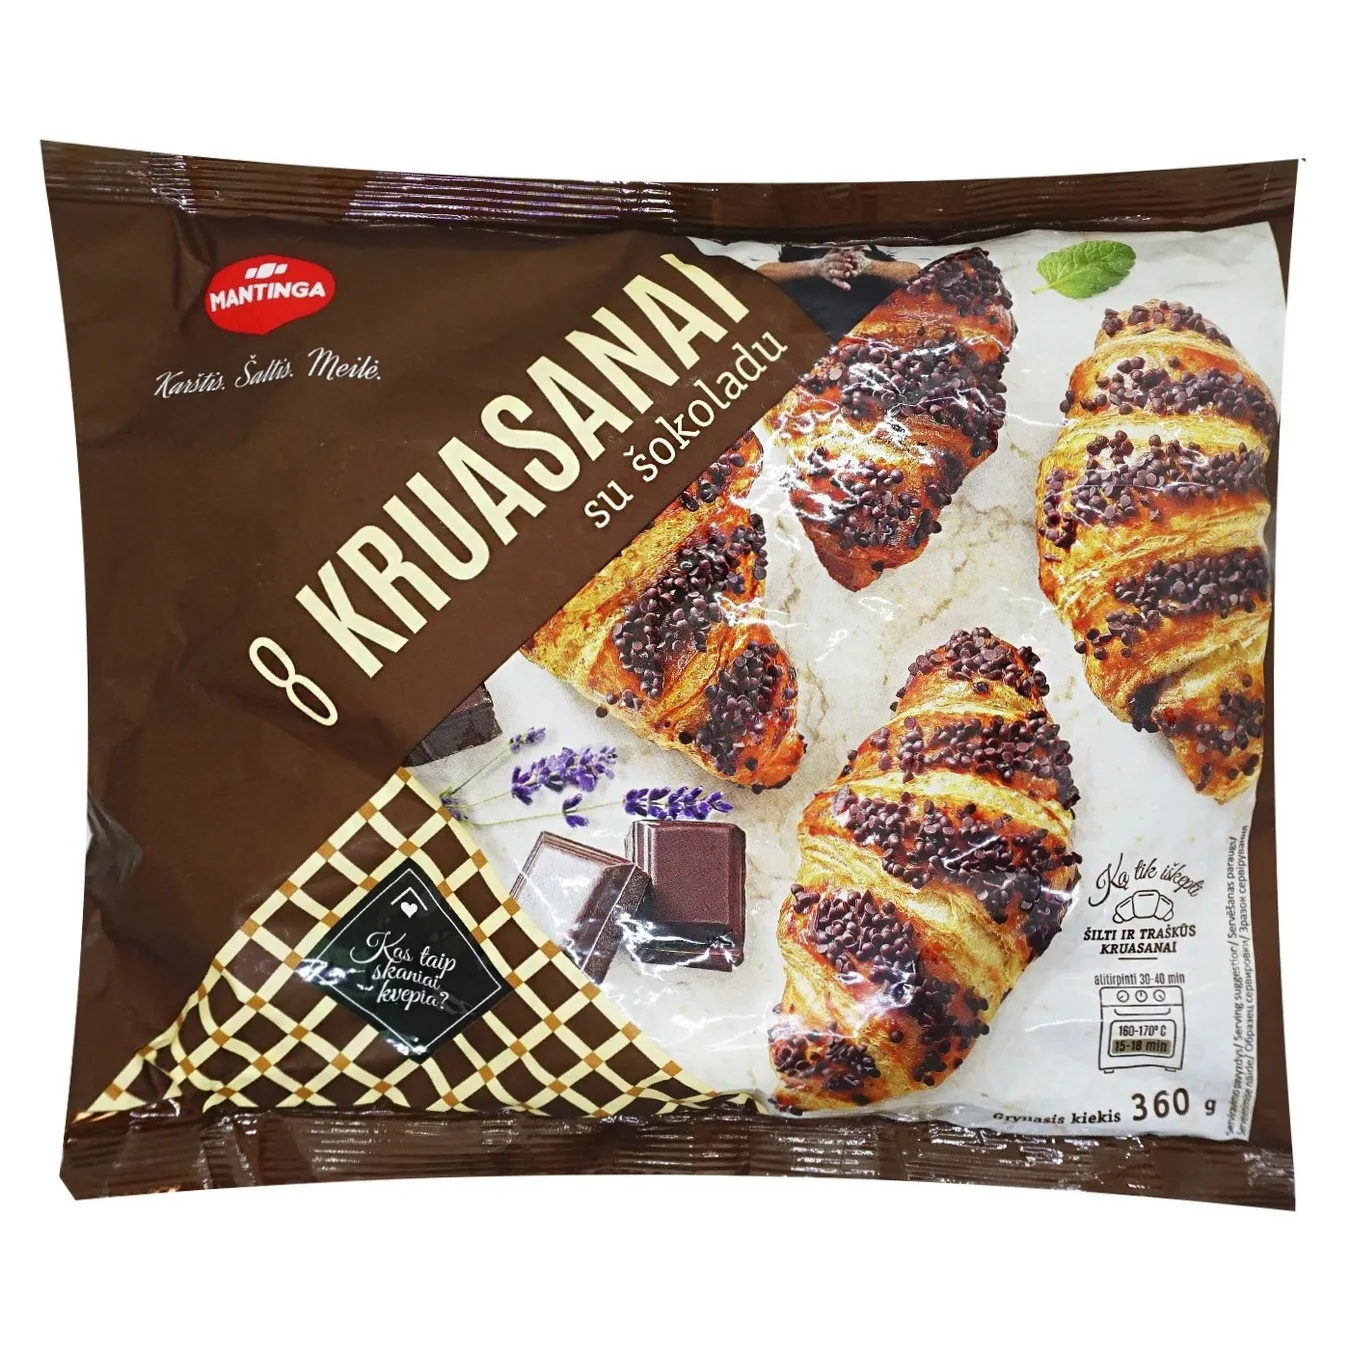 Mantinga croissants with chocolate 8 pcs. 360g